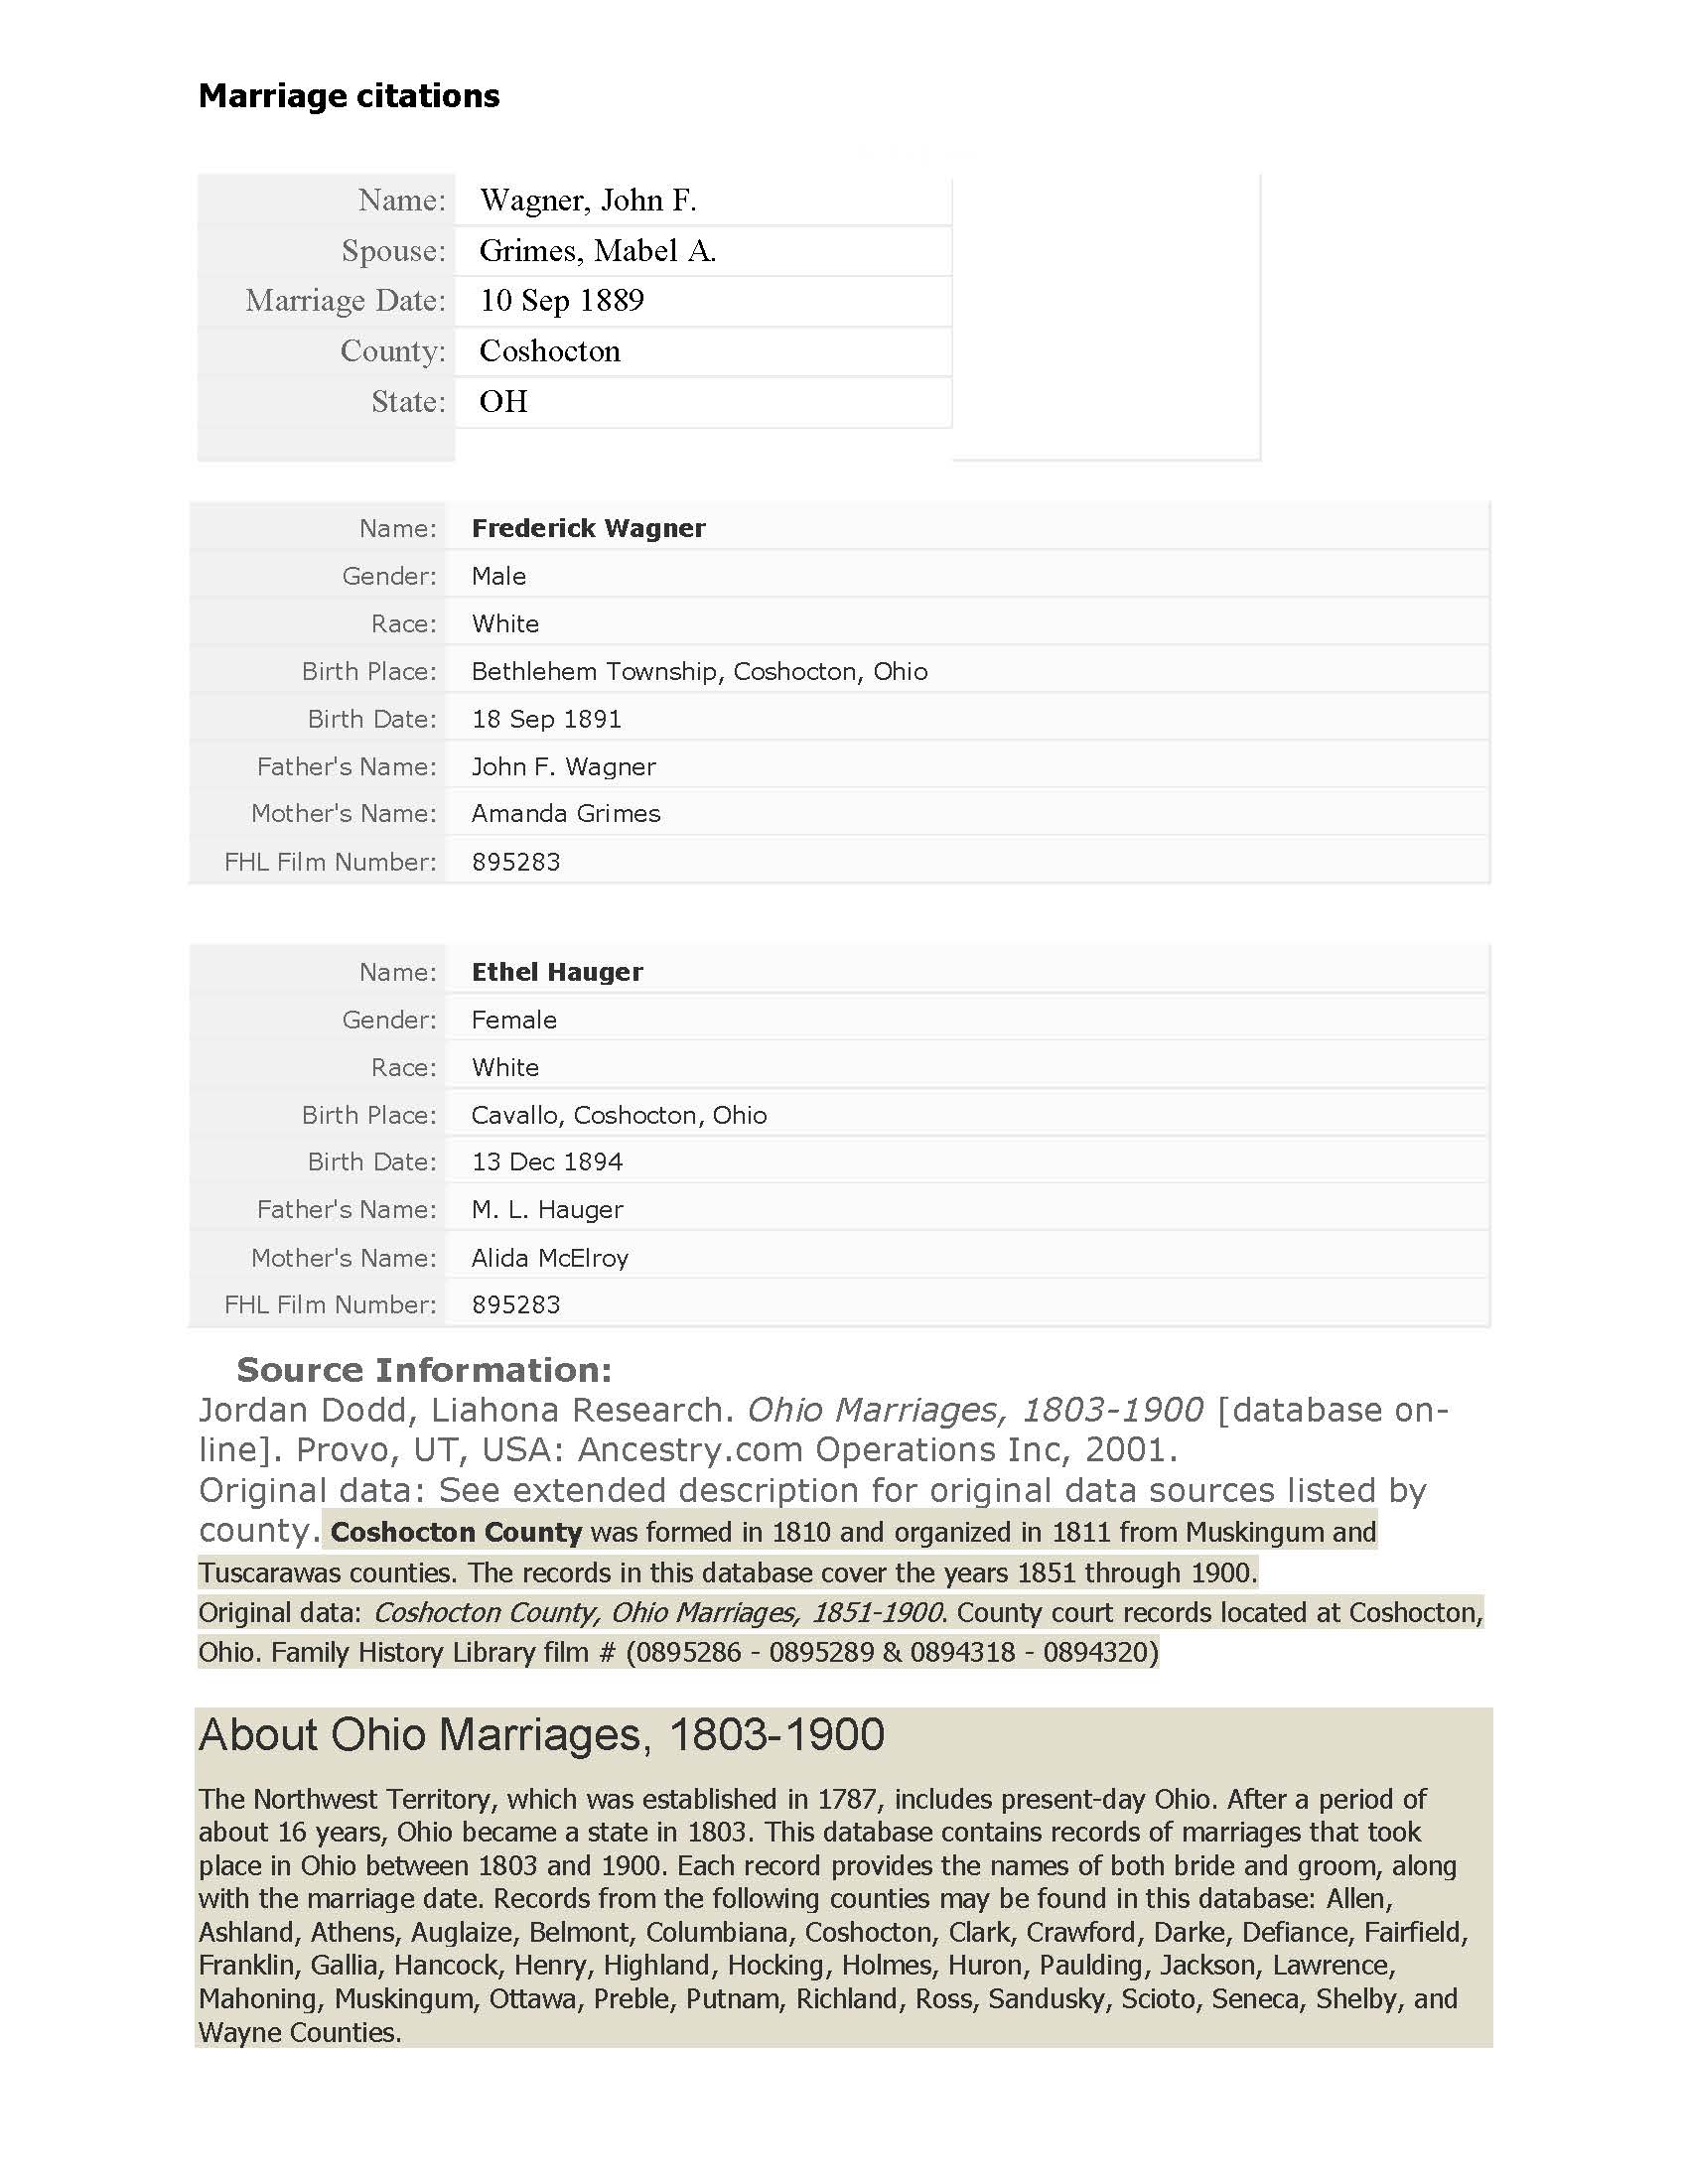 Marriage citations.docx